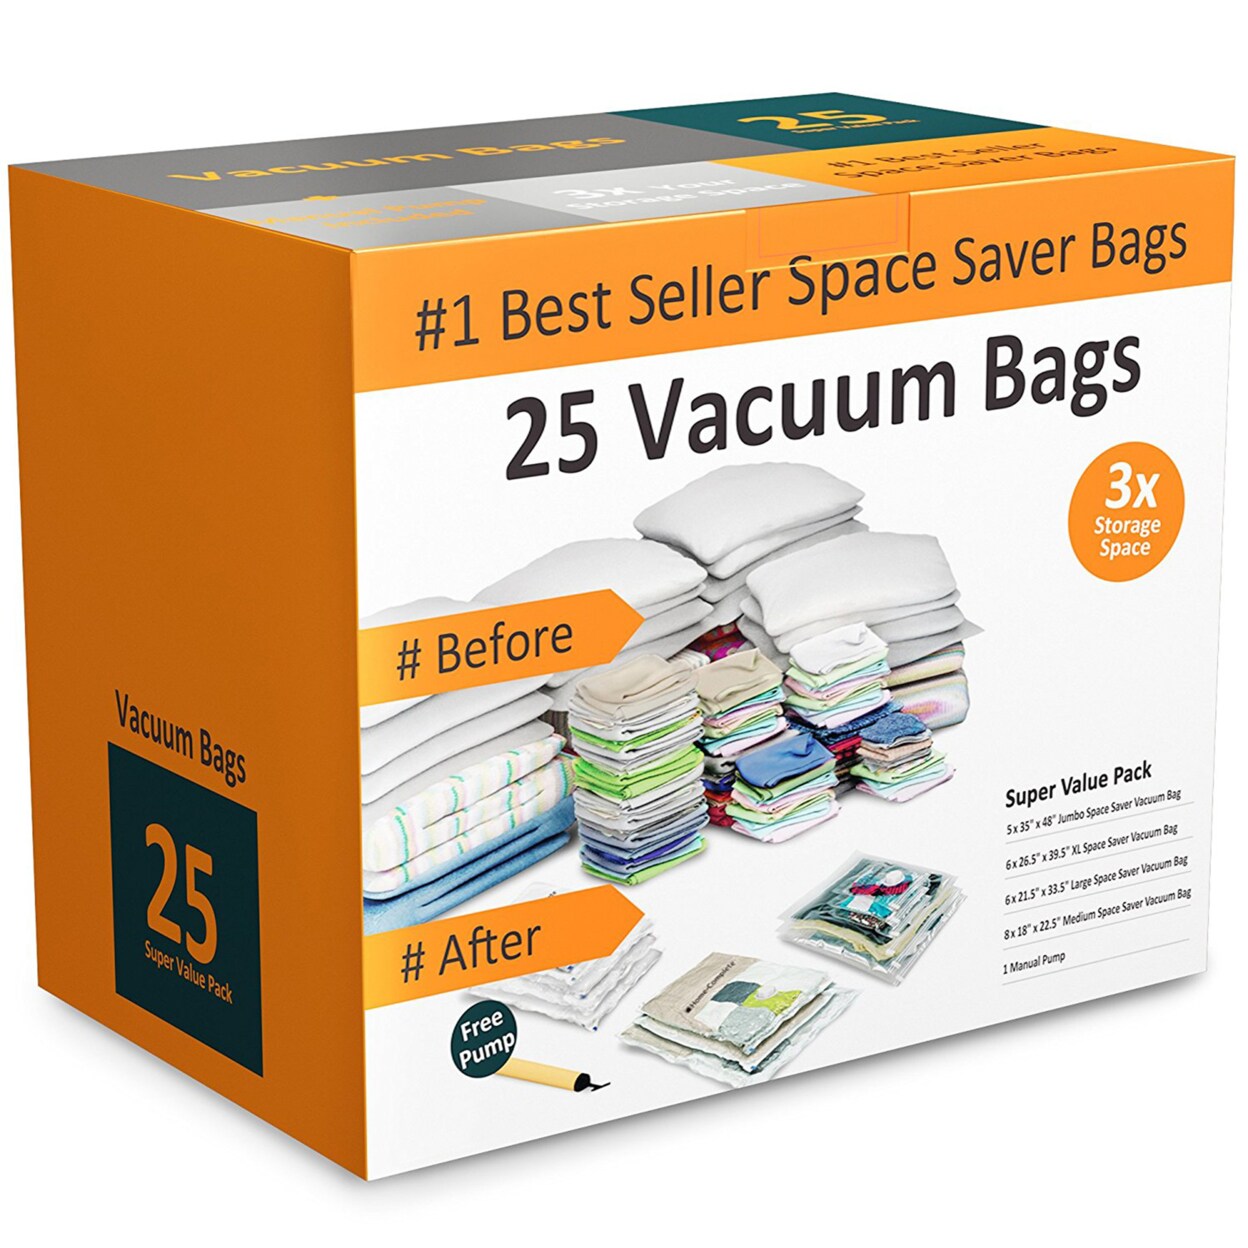 Large Vacuum Storage Bag